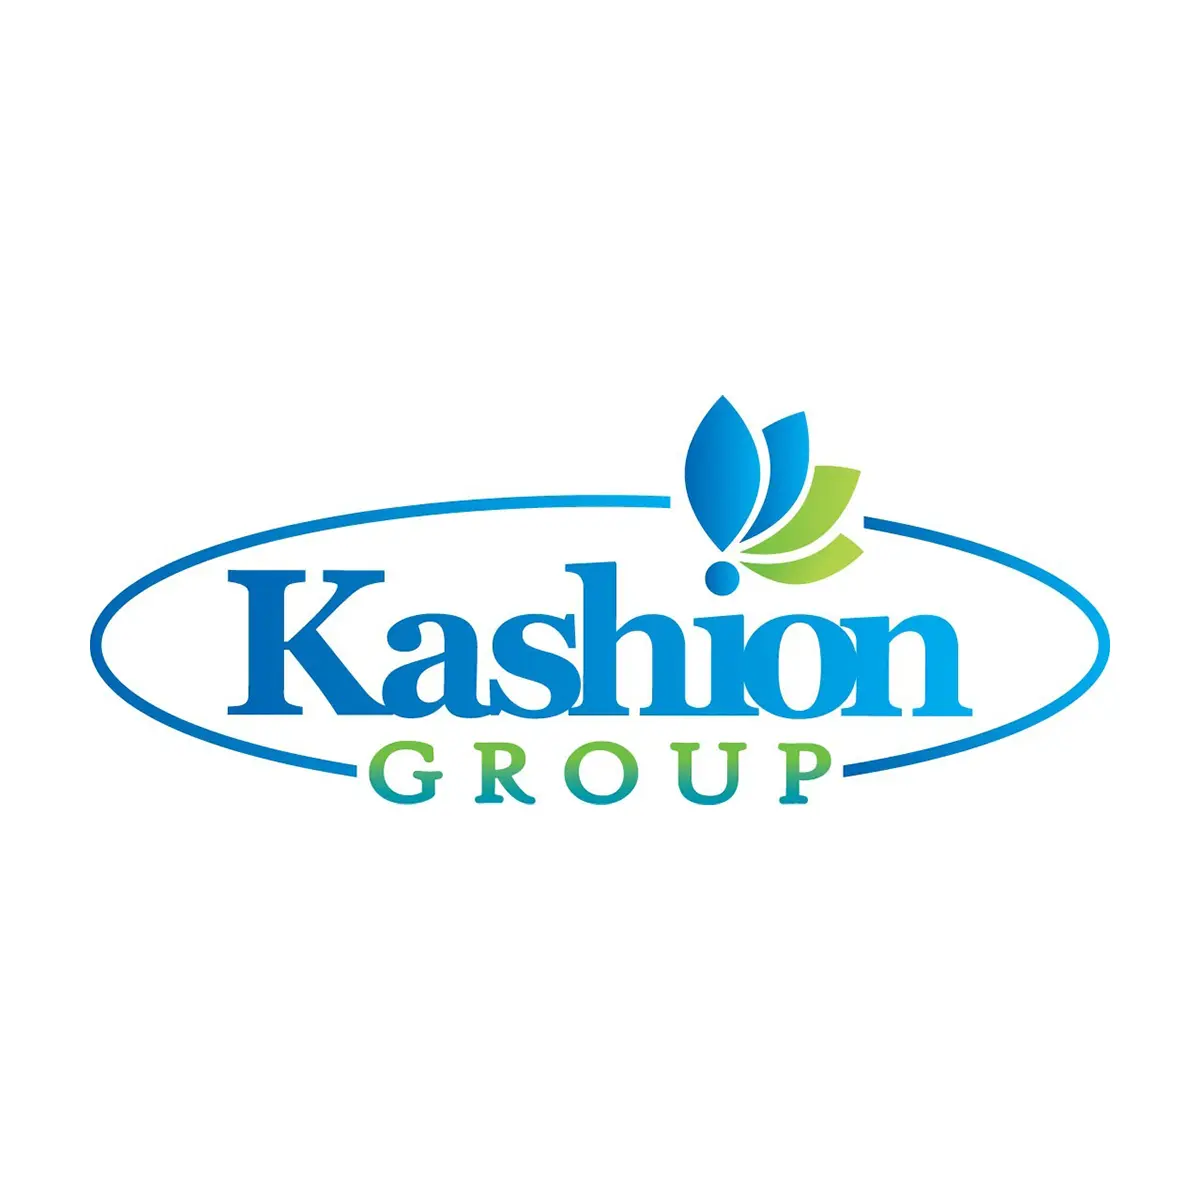 Kashion group logo